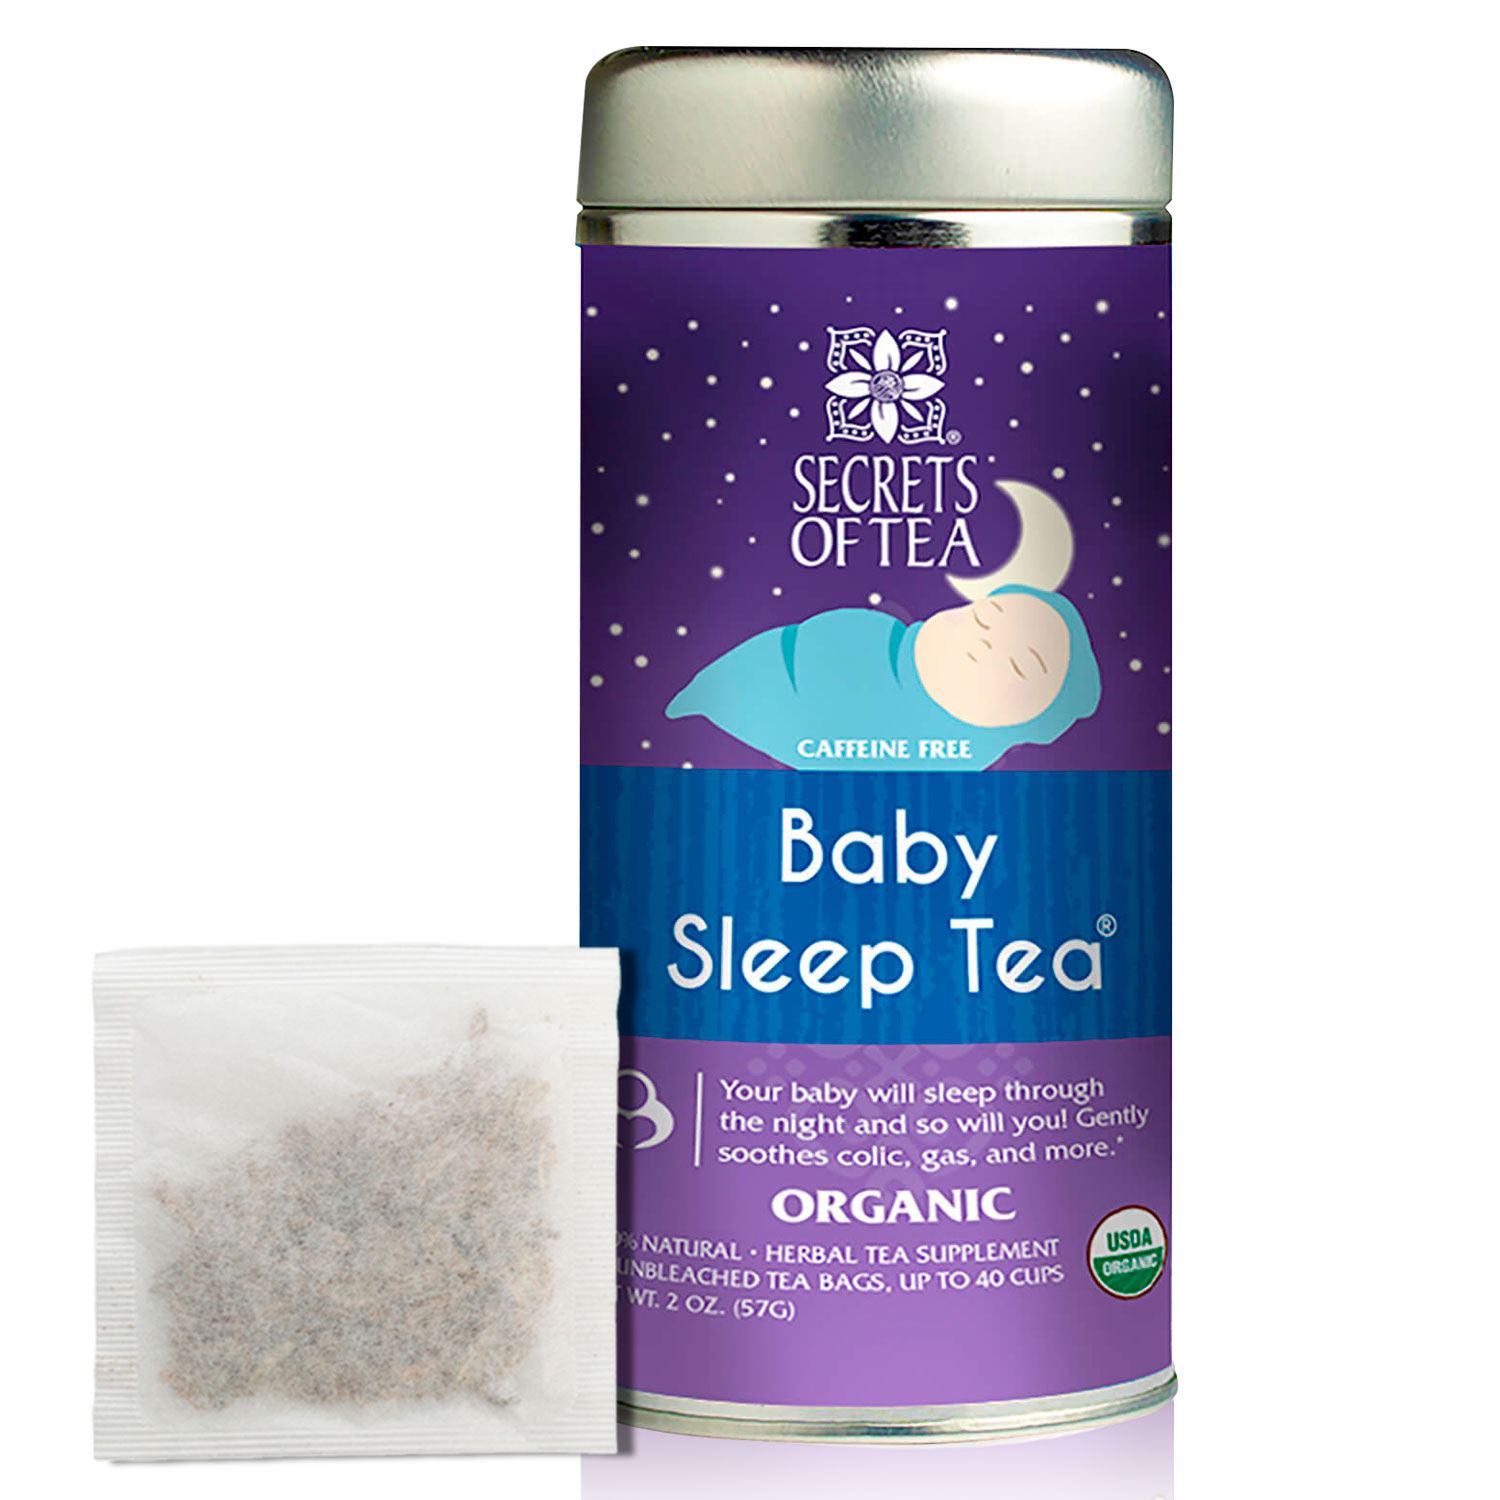 Secrets of Tea Baby Sleep Tea 4 innerpacks per case 2.0 oz